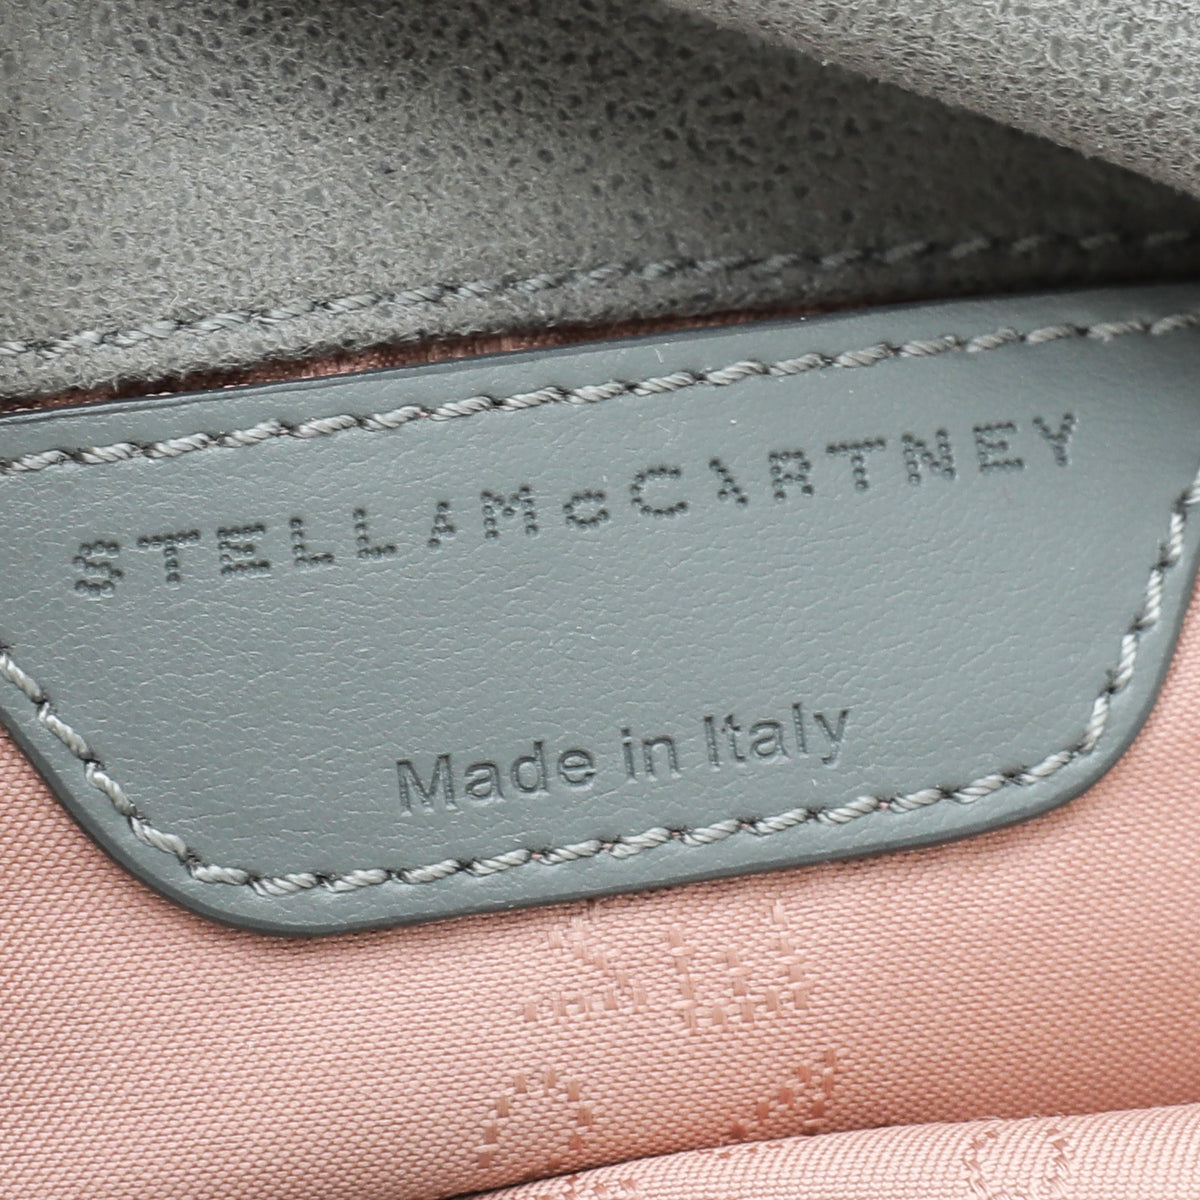 Stella Mccartney Grey Falabella Small Tote Bag